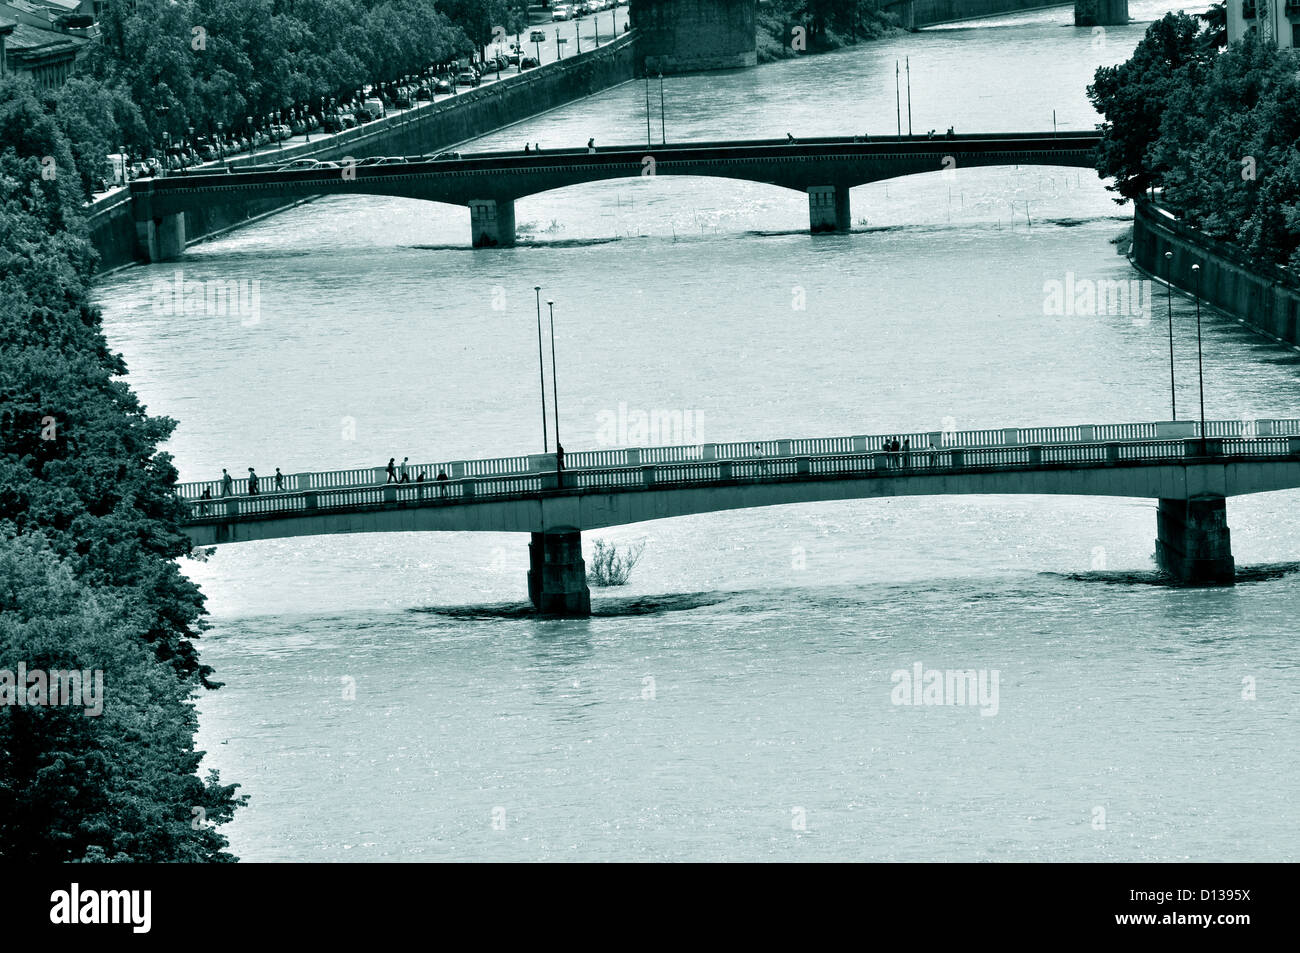 Italy, Veneto, Verona, Adige River, Bridges Stock Photo